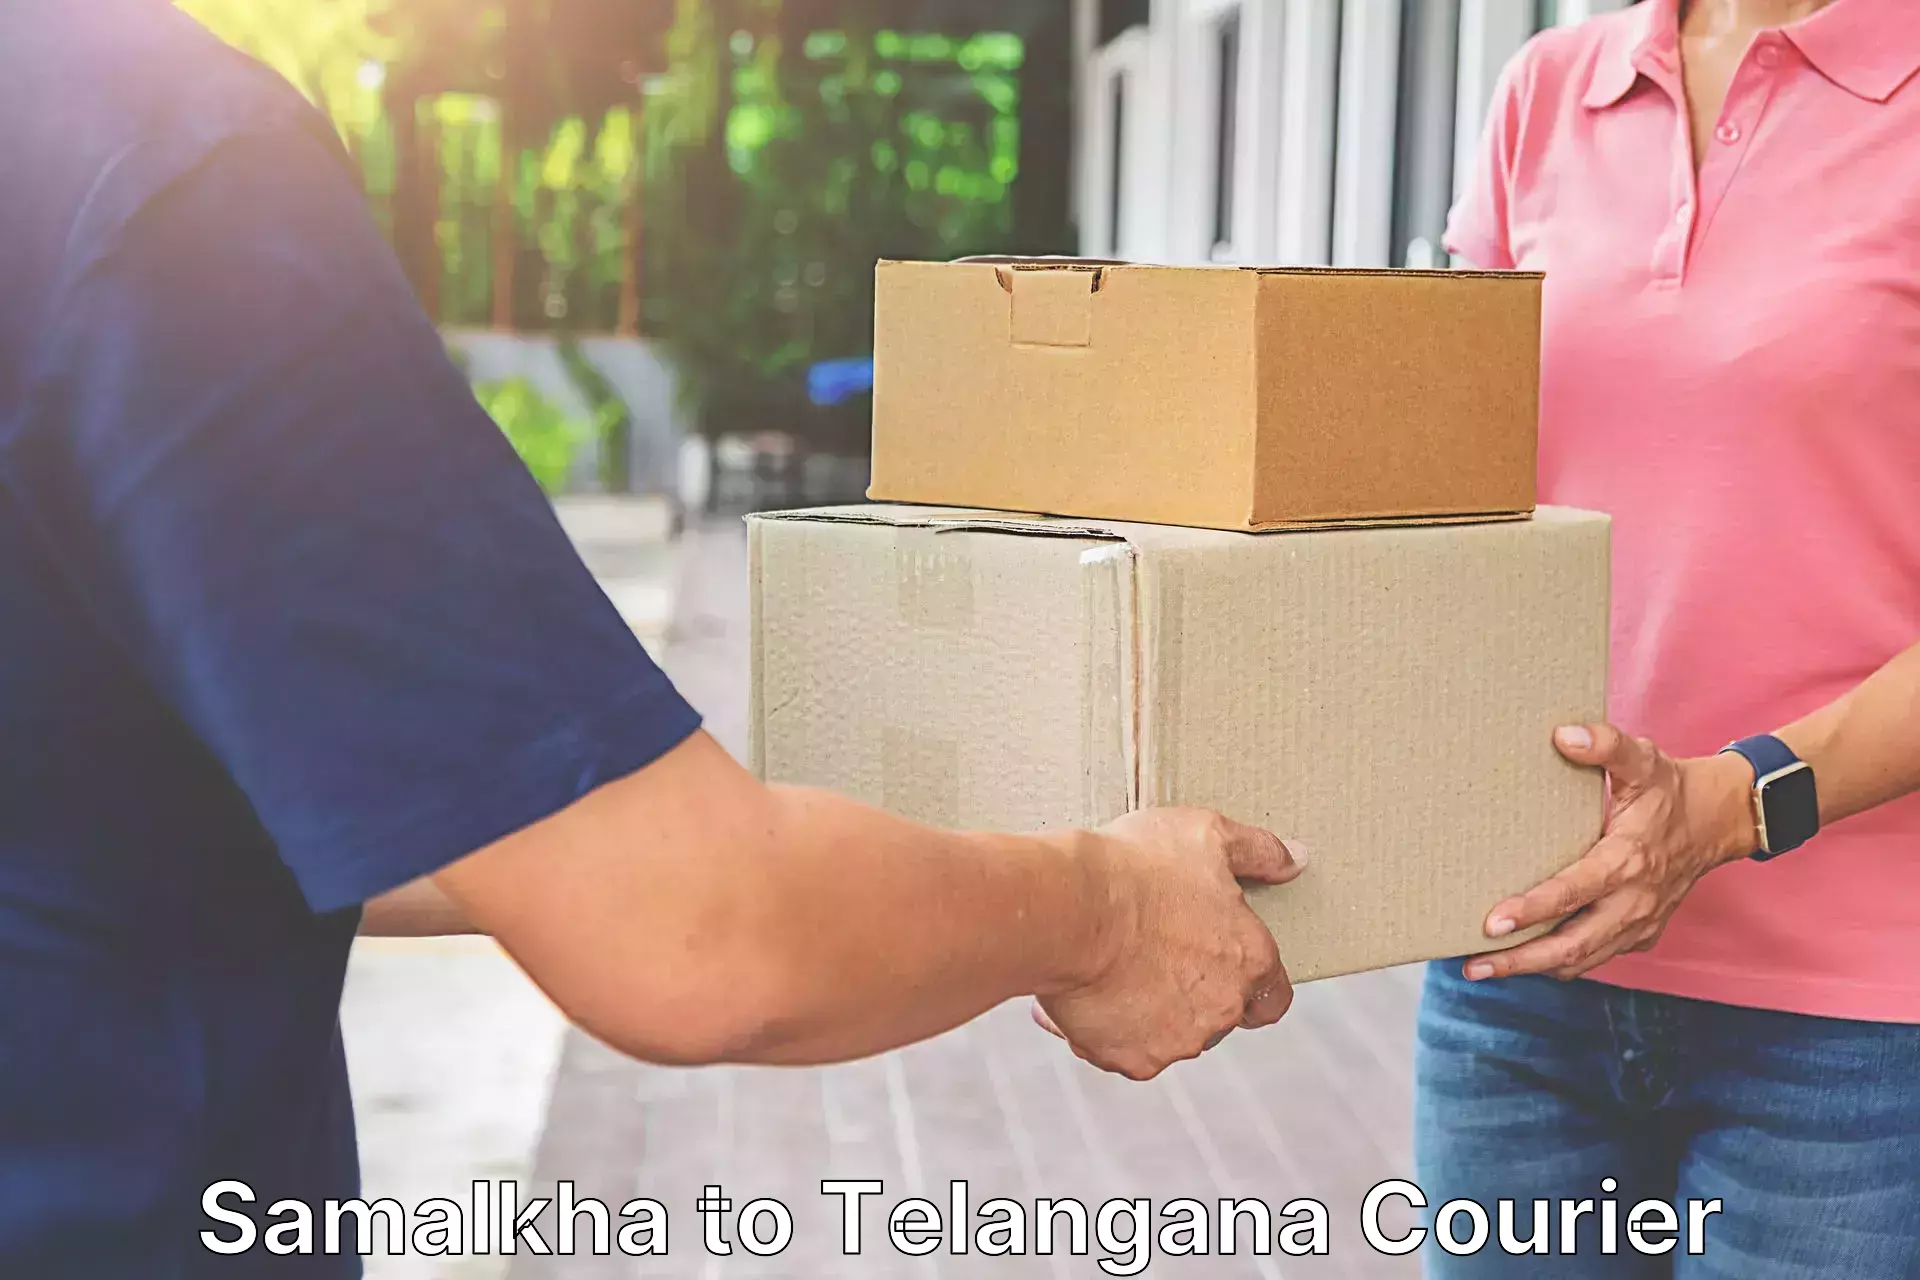 Flexible delivery schedules Samalkha to Manuguru